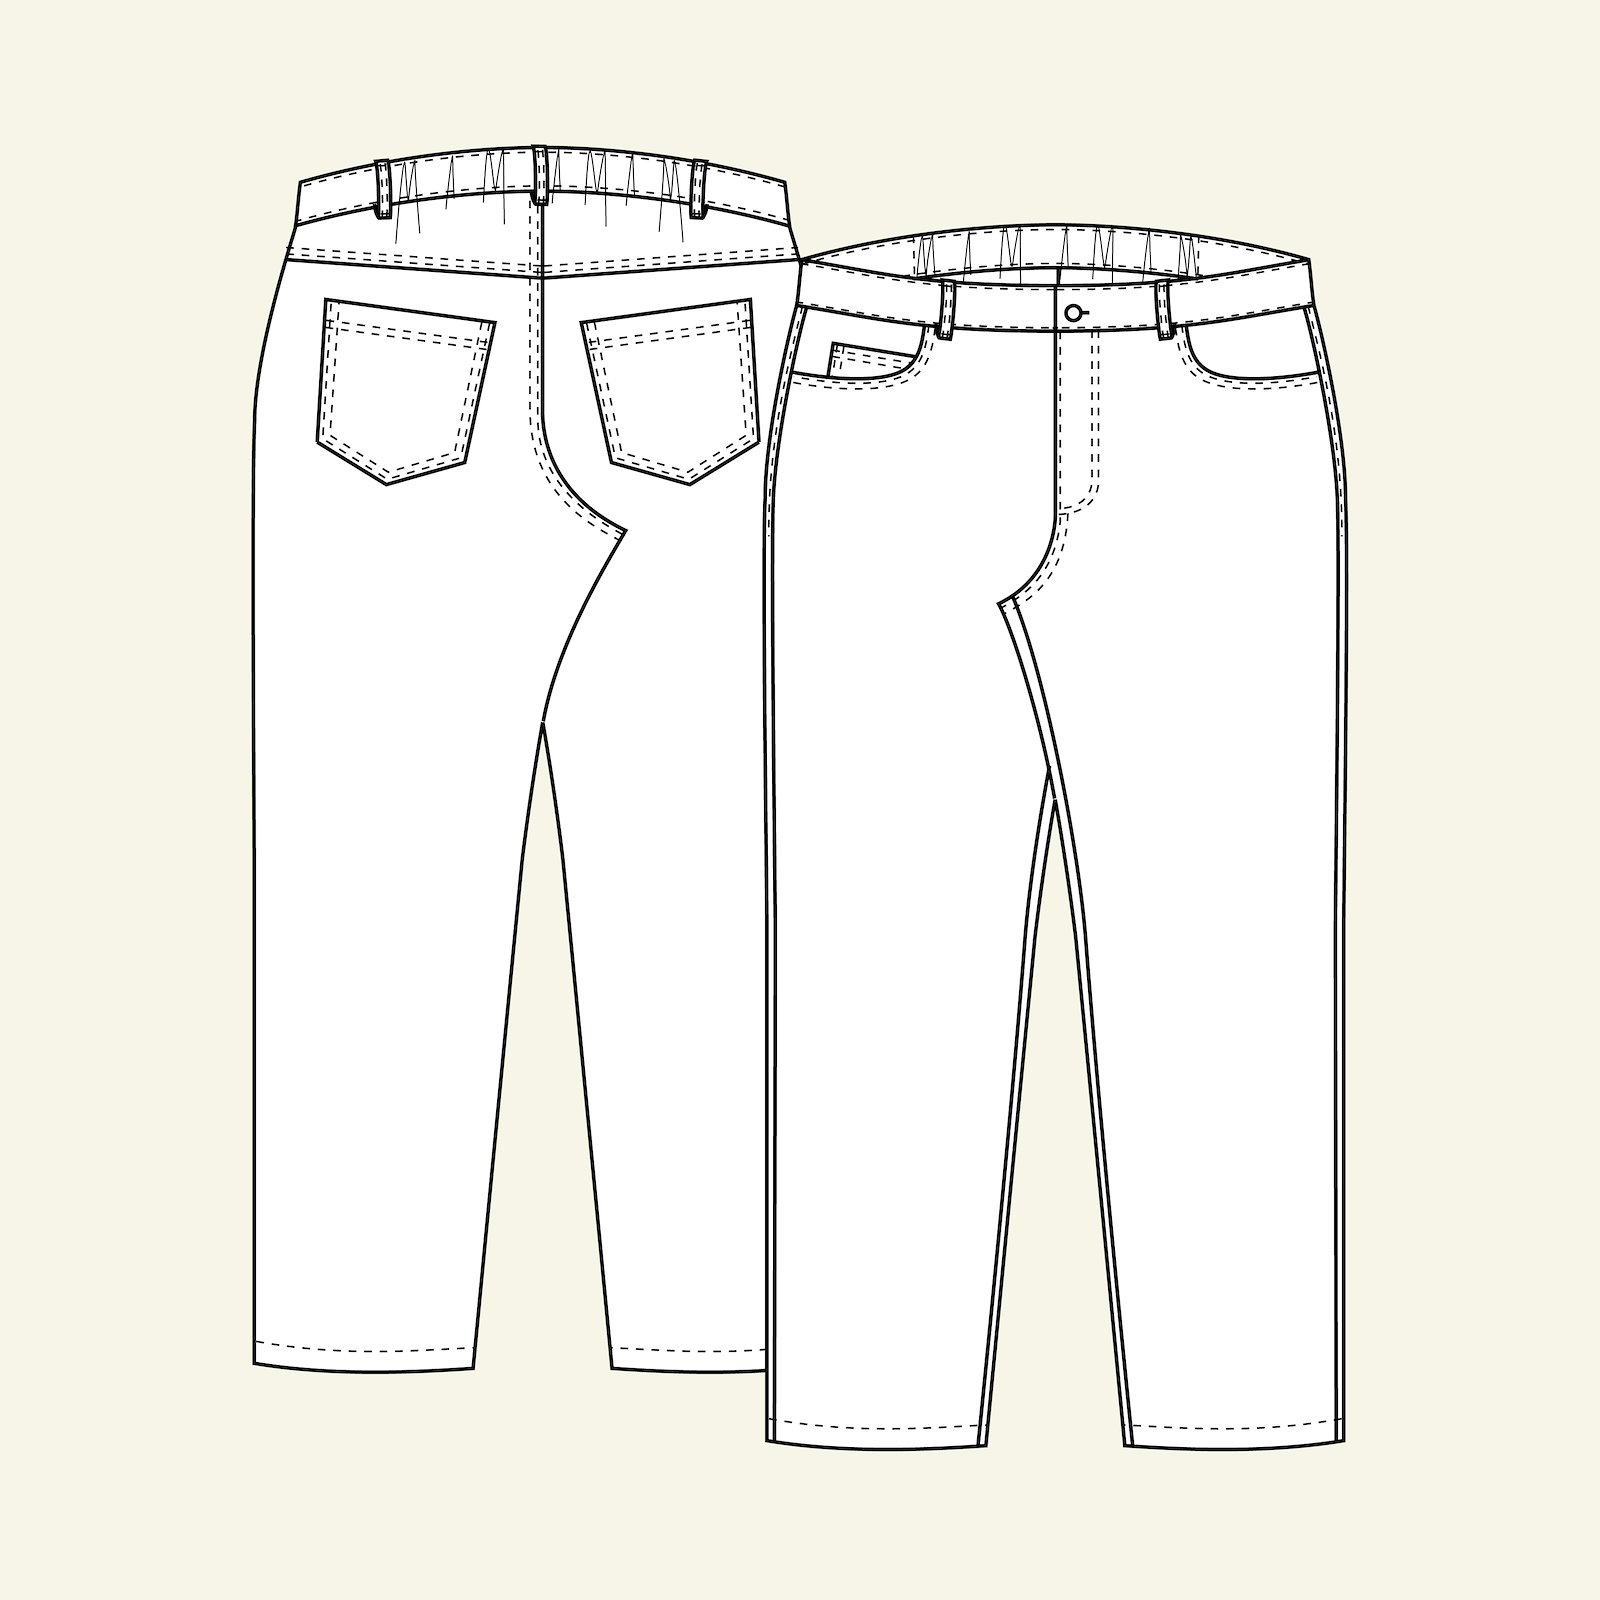 Klassisch Jeans mit Gummiband hinter, 50 p70007000_p70007001_p70007002_p70007003_p70007004_pack_b